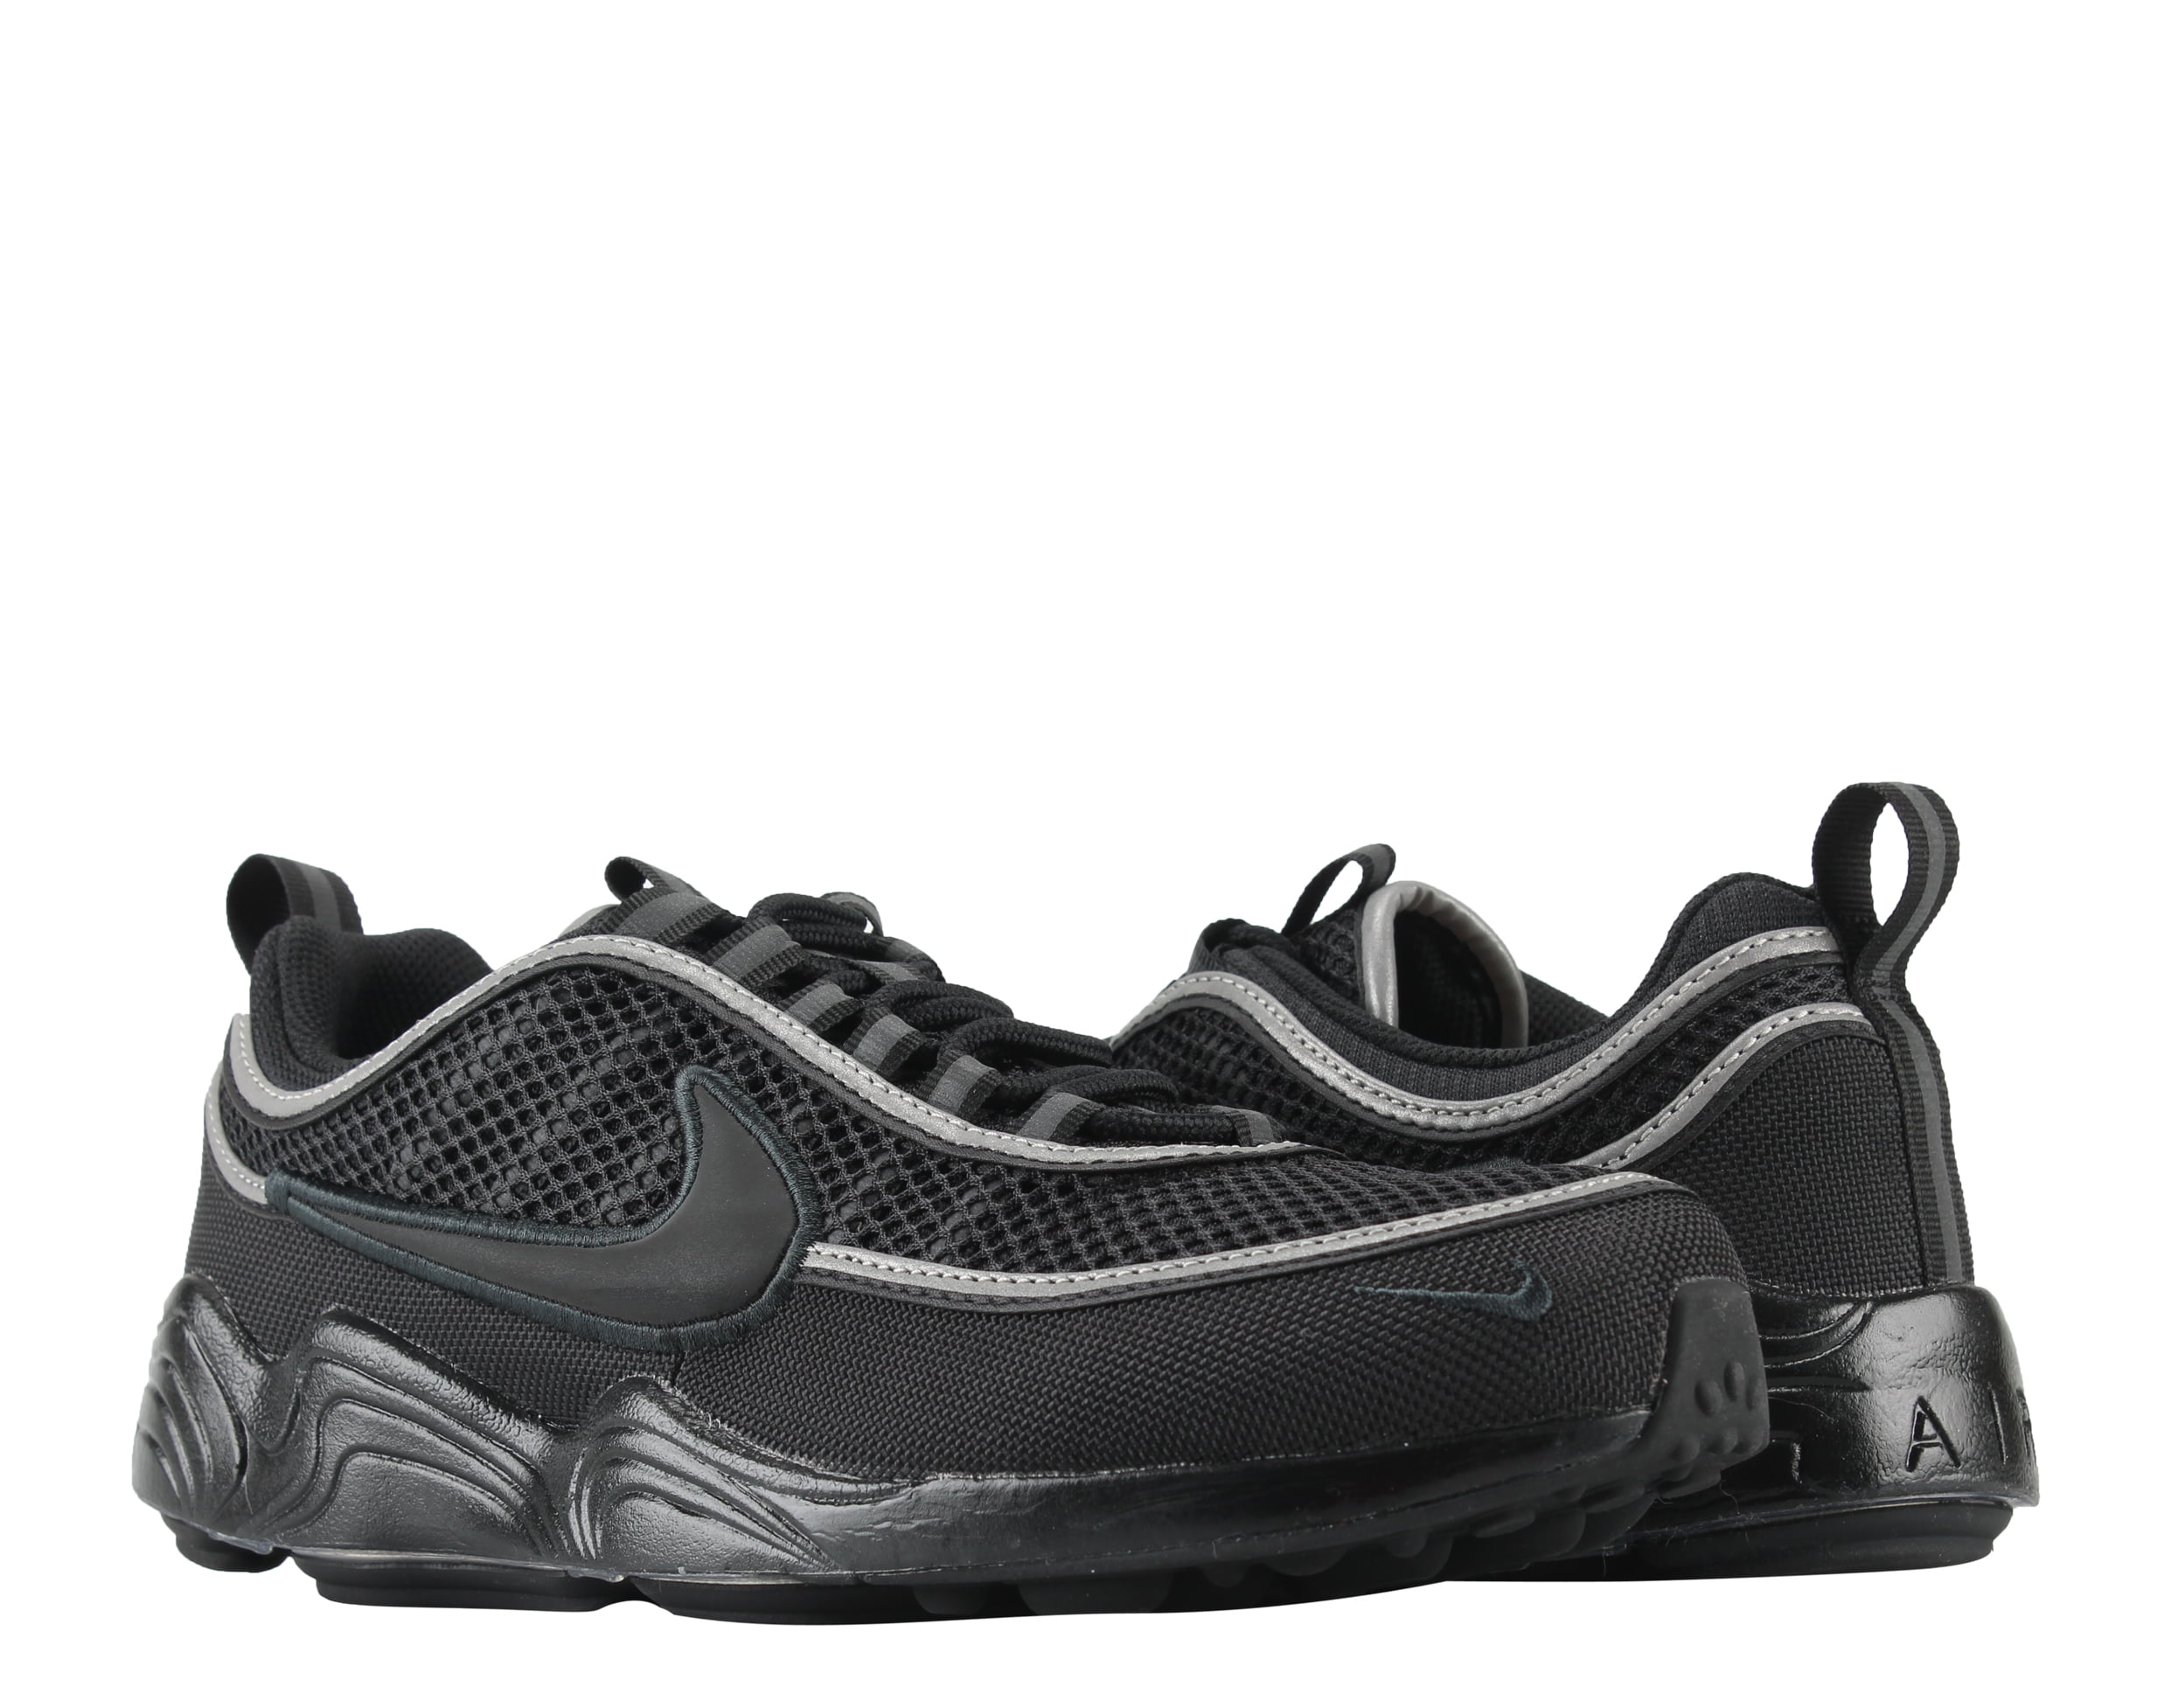 Nike Air Zoom Spiridon '16 Black/Black-Anthracite Men's Size 9.5 - Walmart.com